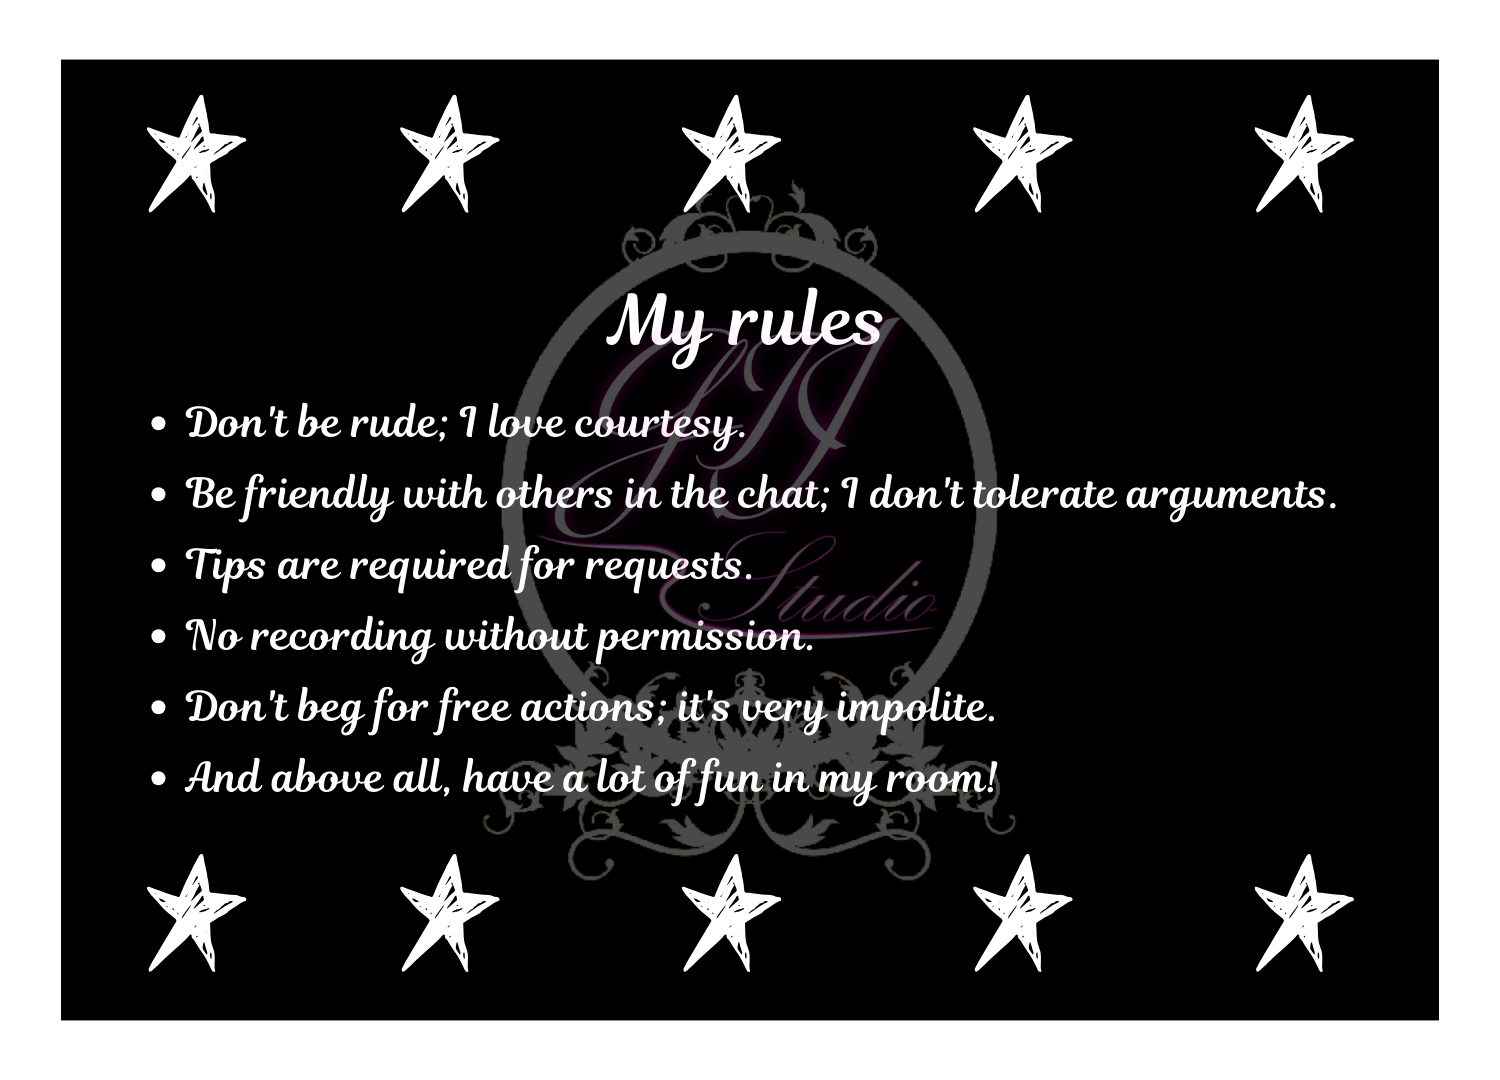 Strikingandy My rules image: 1